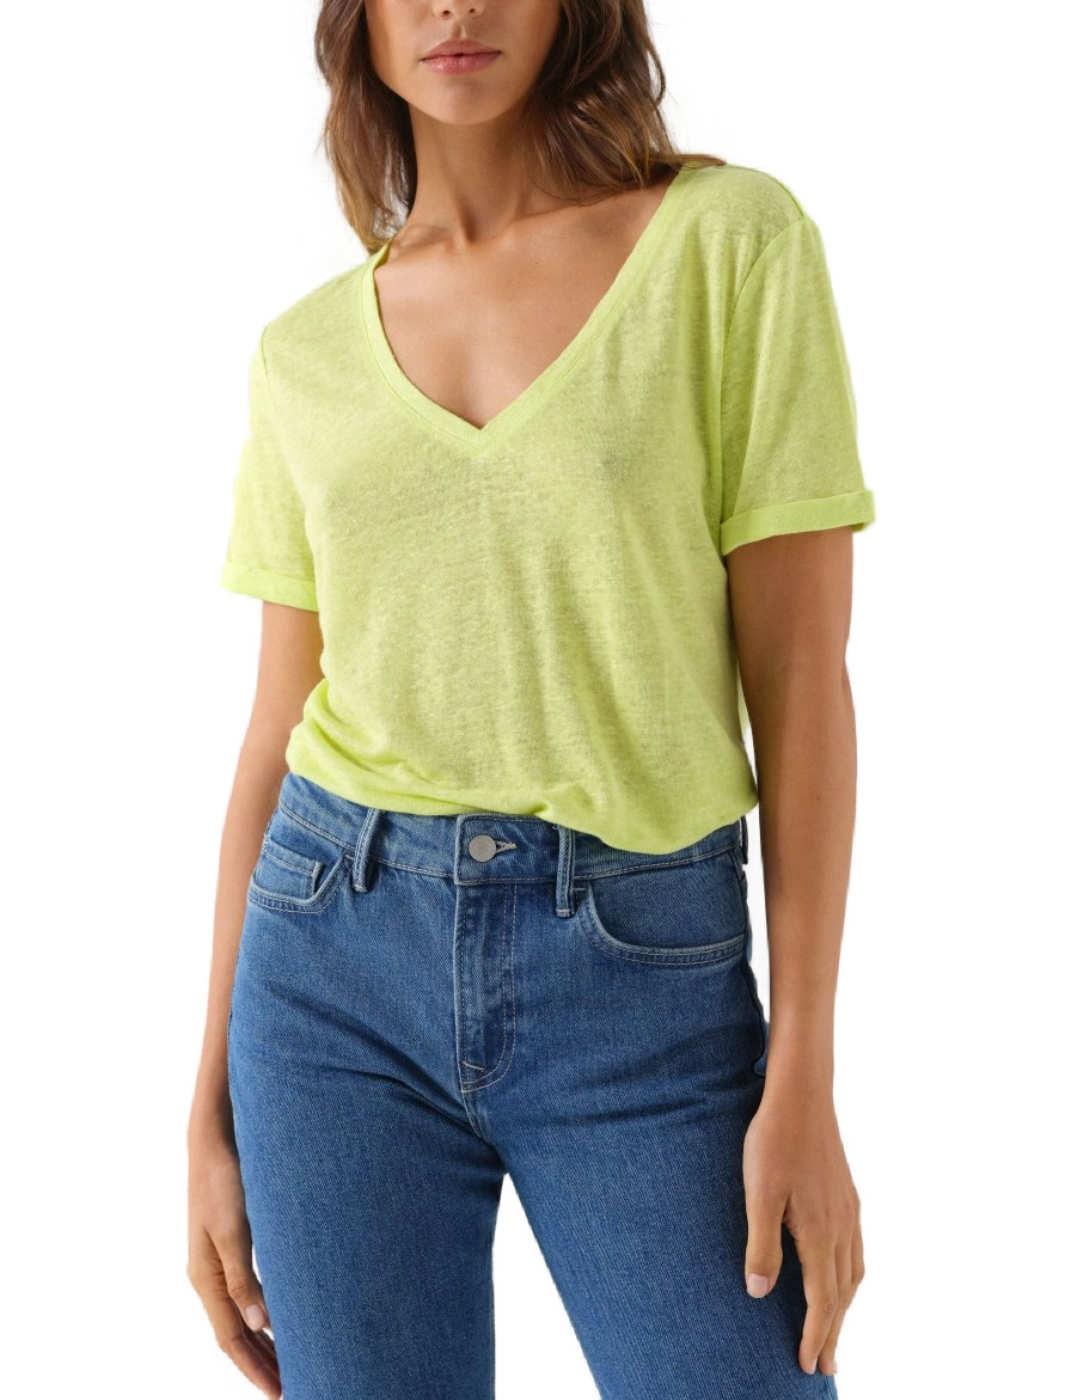 Camiseta Salsa verde lima lino manga corta para mujer